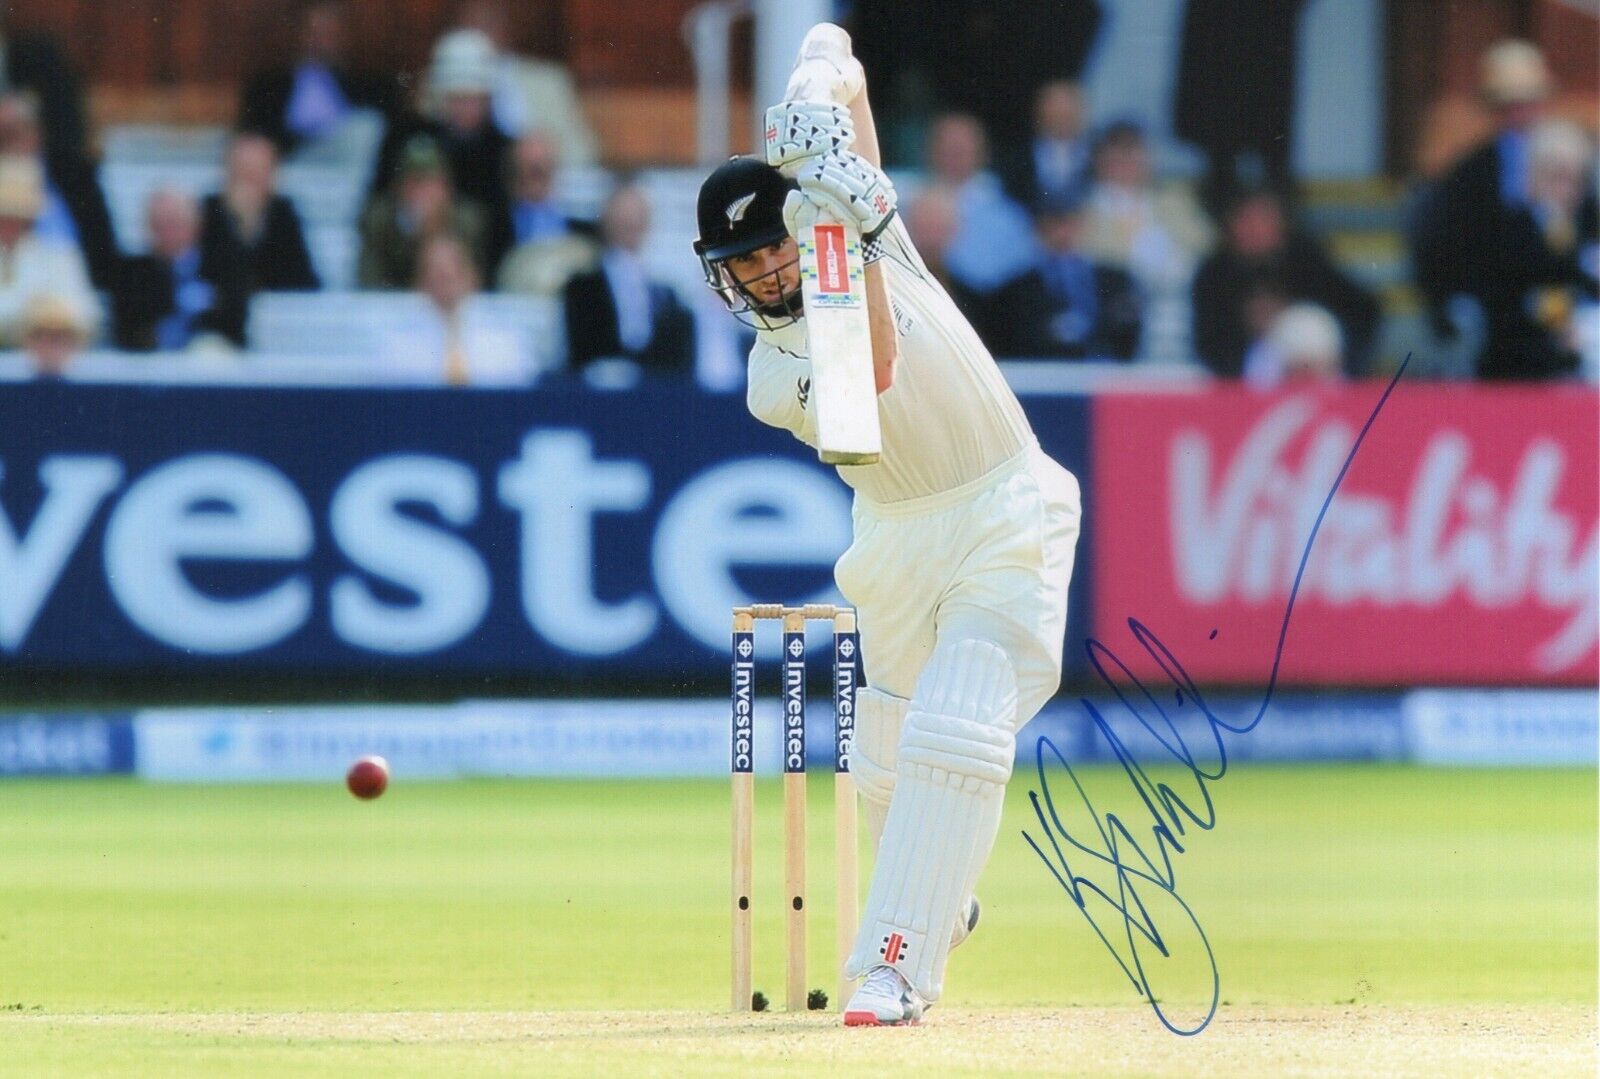 5x7 Original Autographed Photo of New Zealand Cricketer Kane Williamson